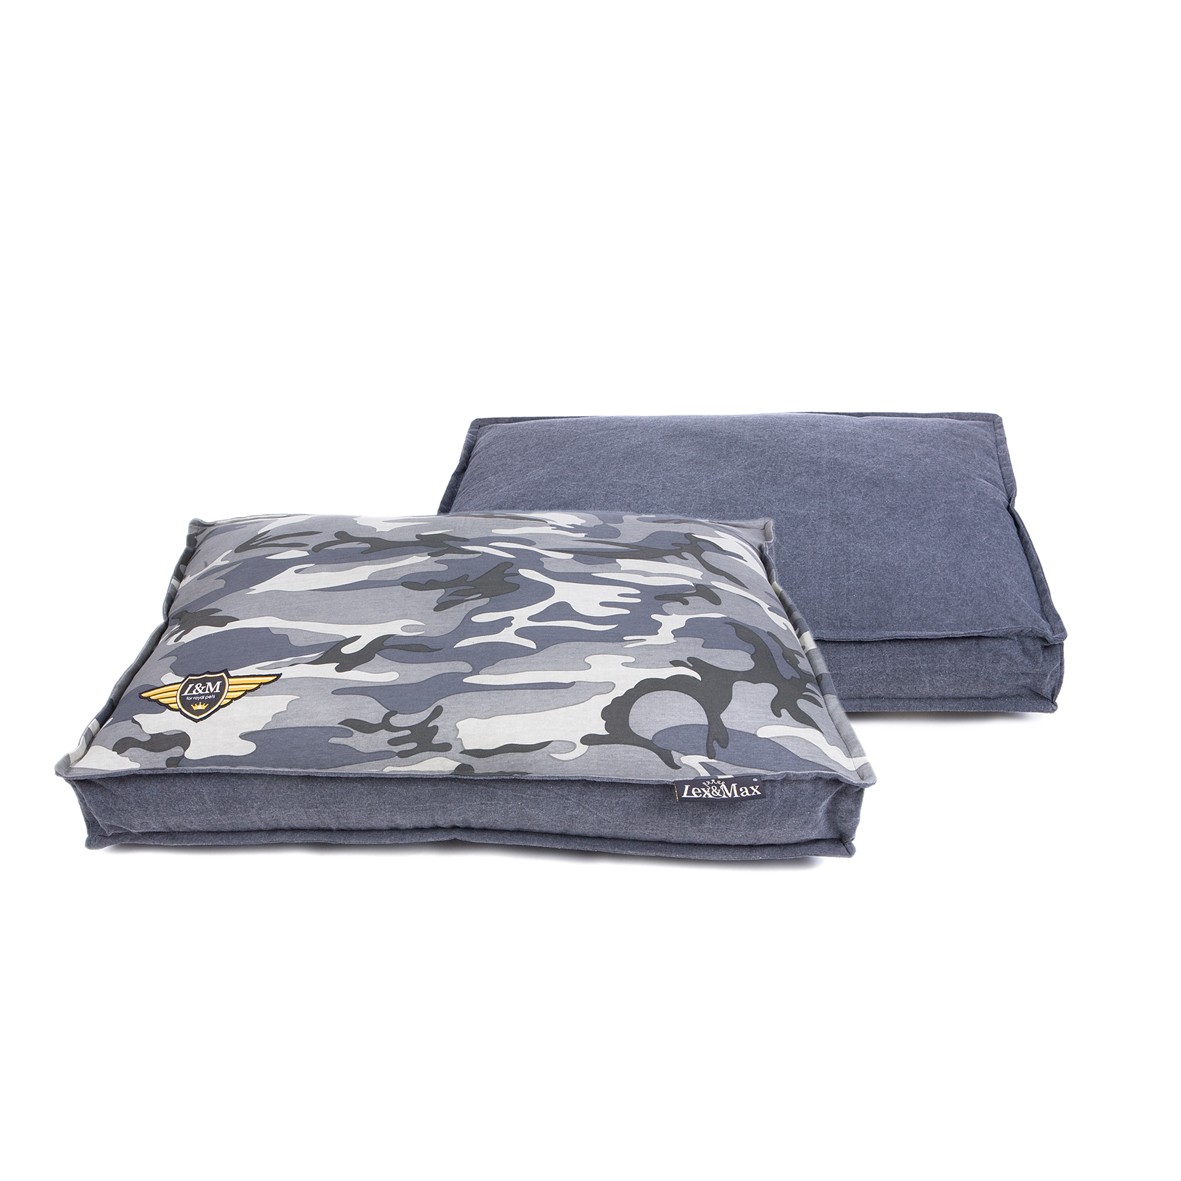 Lex & Max Luxusní pelíšek pro psa Lex & Max Army 90 x 65 cm | šedý